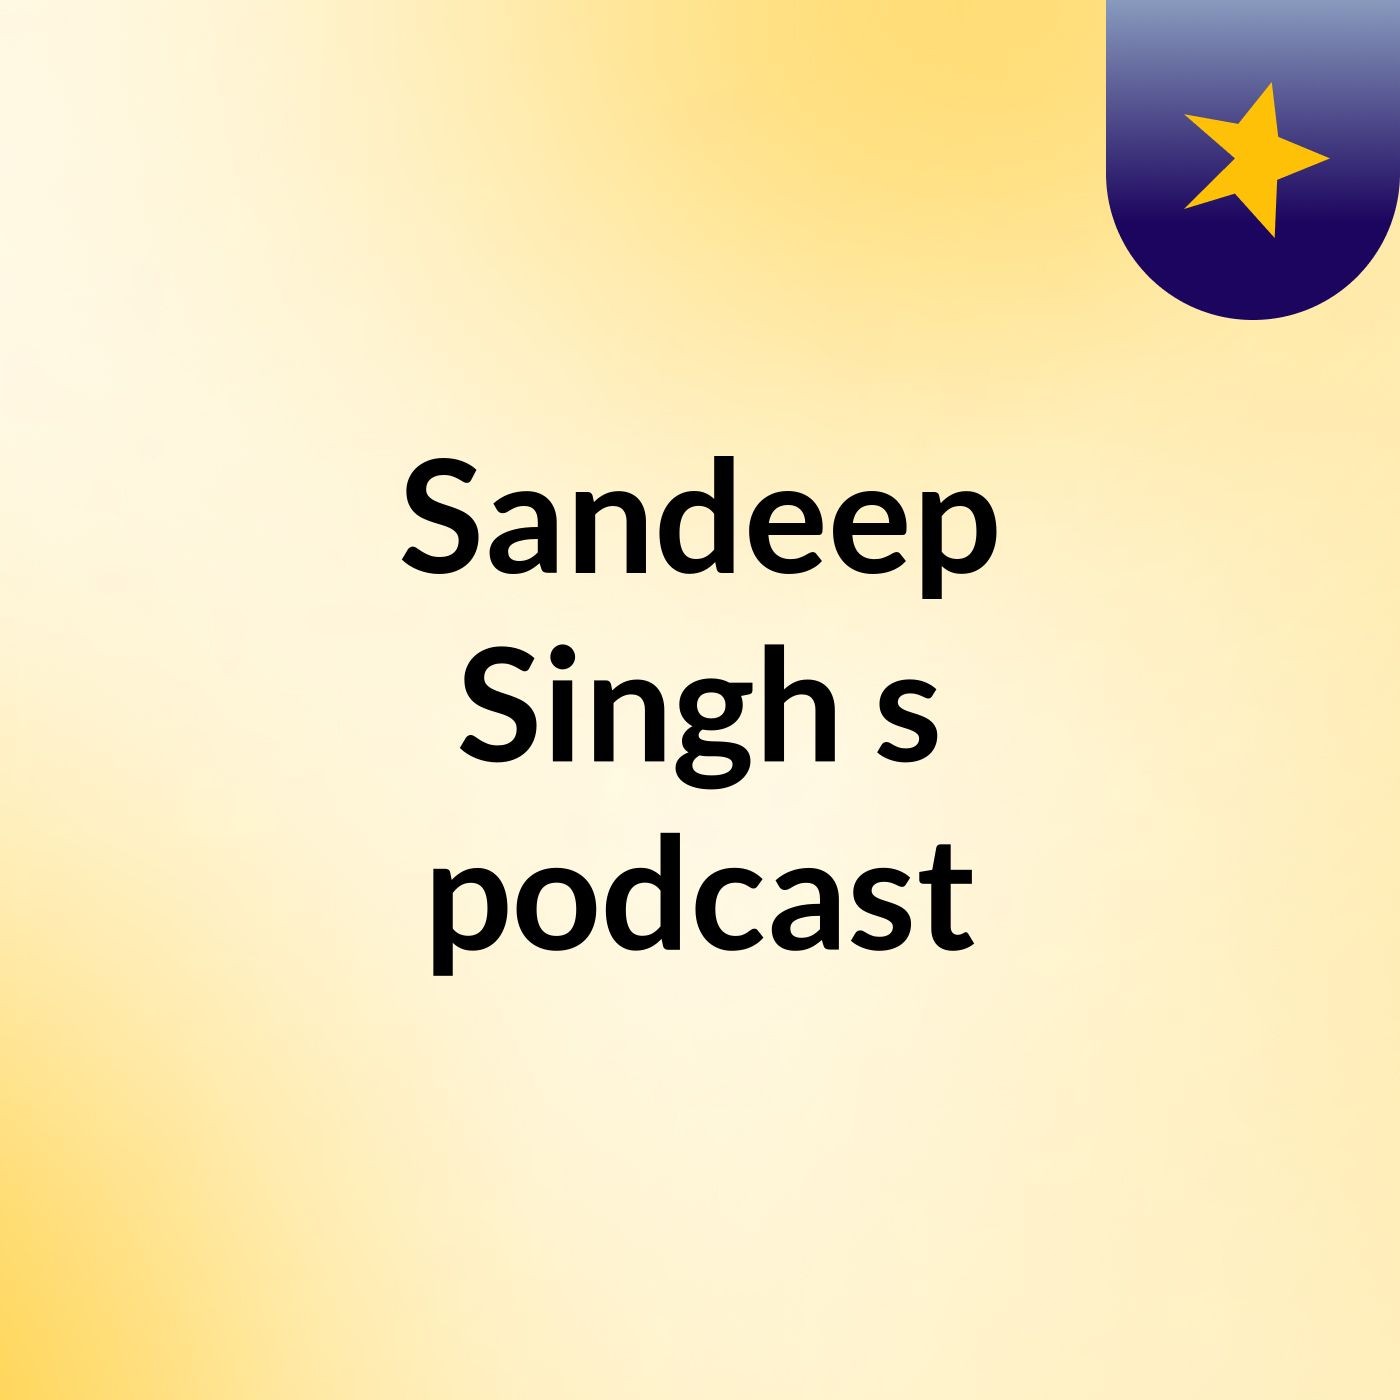 Episode 4 - Sandeep Singh's podcast